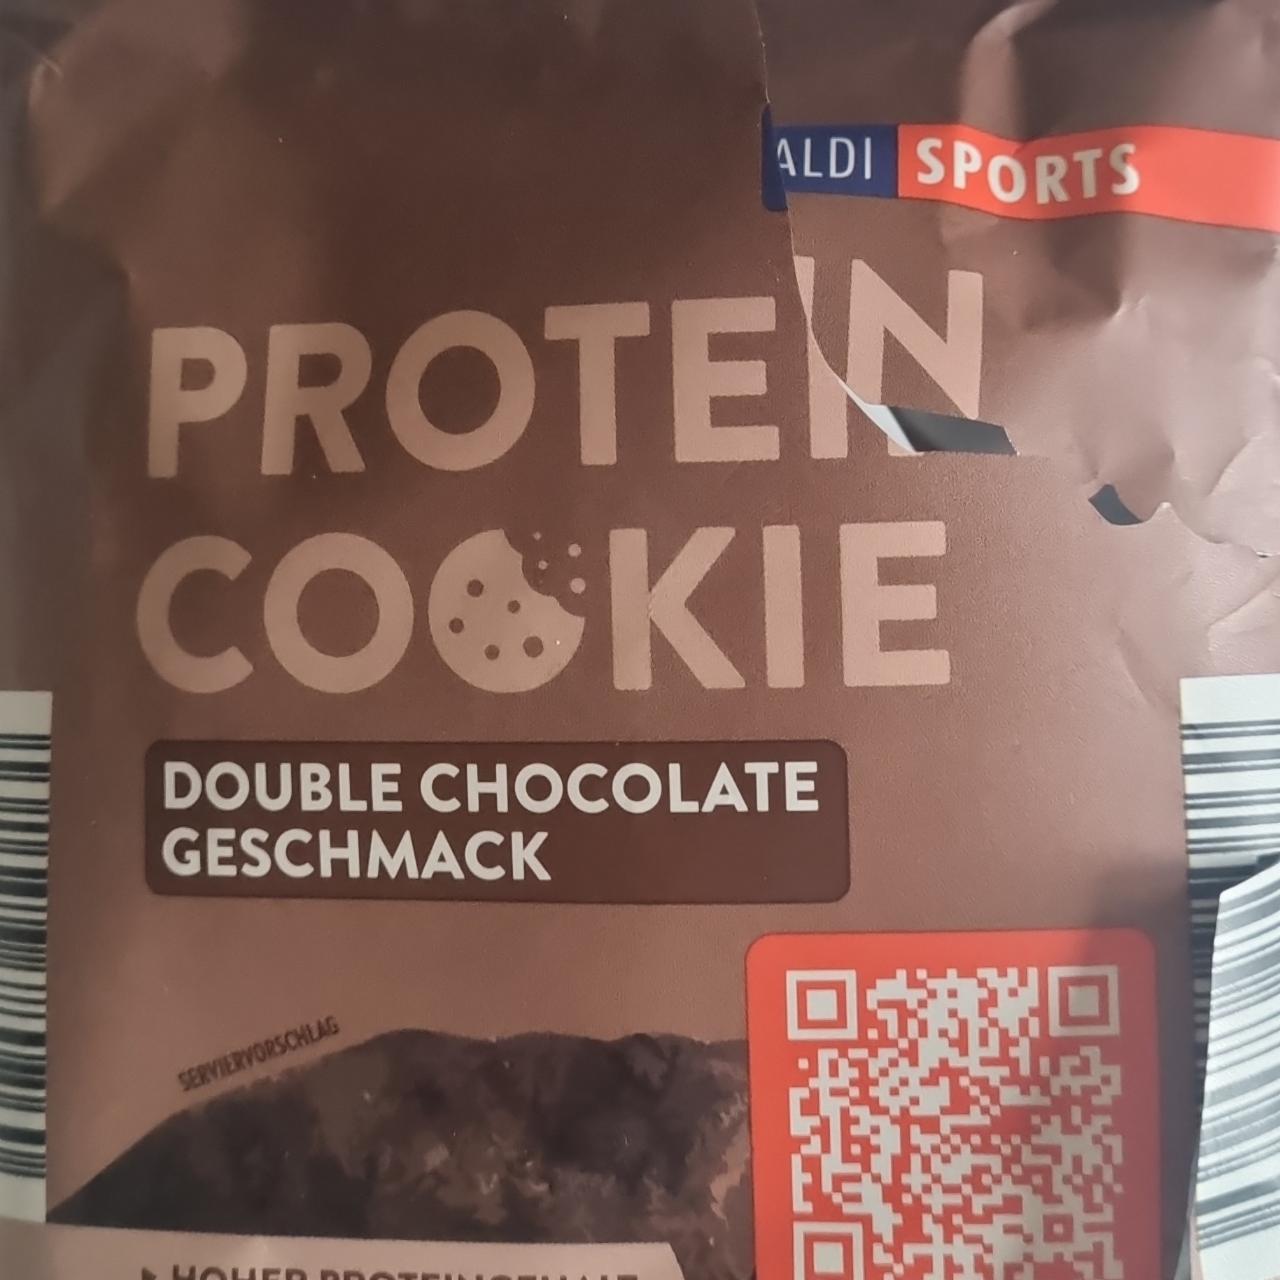 Fotografie - Protein Cookie Double Chocolate Geschmack Aldi Sports